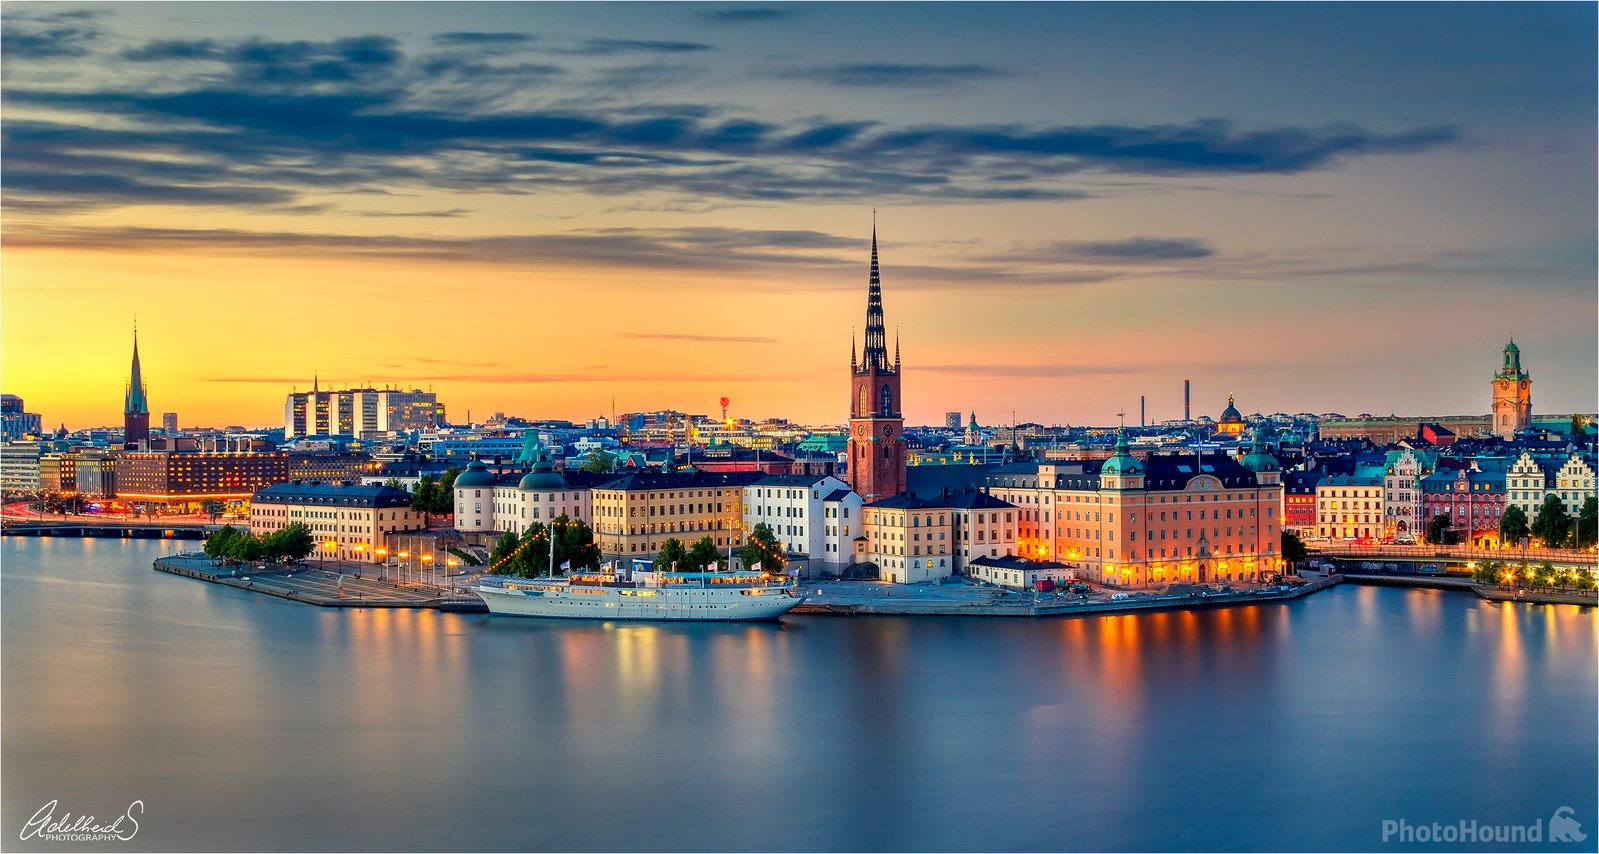 Image of Stockholm View from Monteliusvägen by Adelheid Smitt